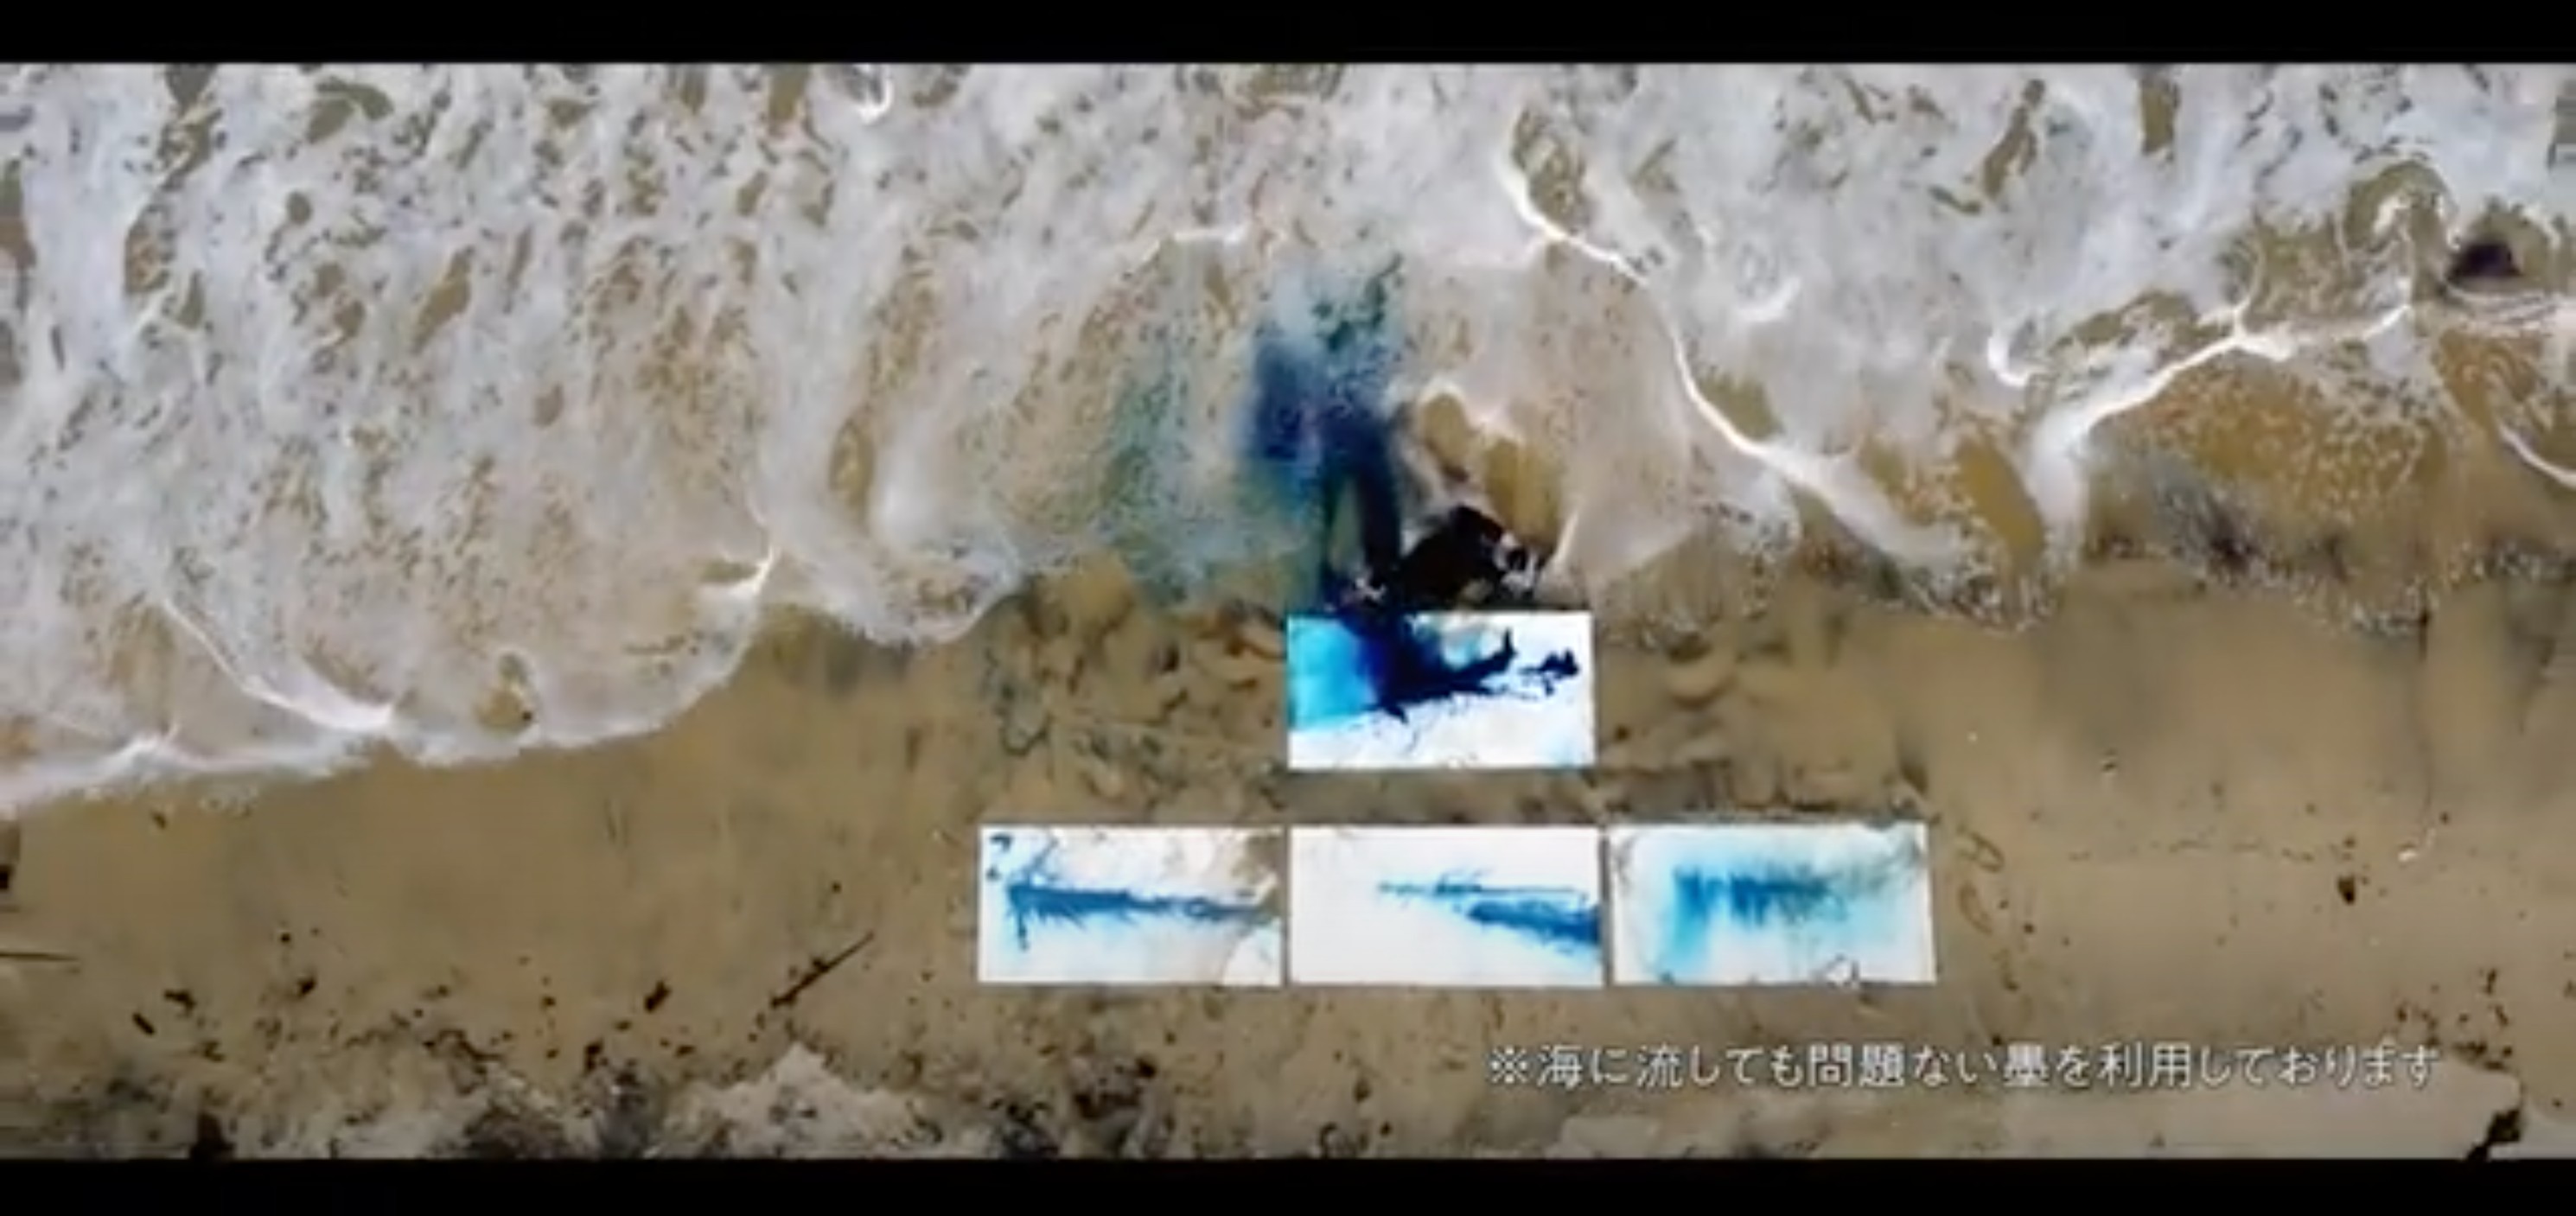 ANA 全日空 公式 YouTube OFF TO ART 世界へ飛躍するアーティストたち 山口芳水